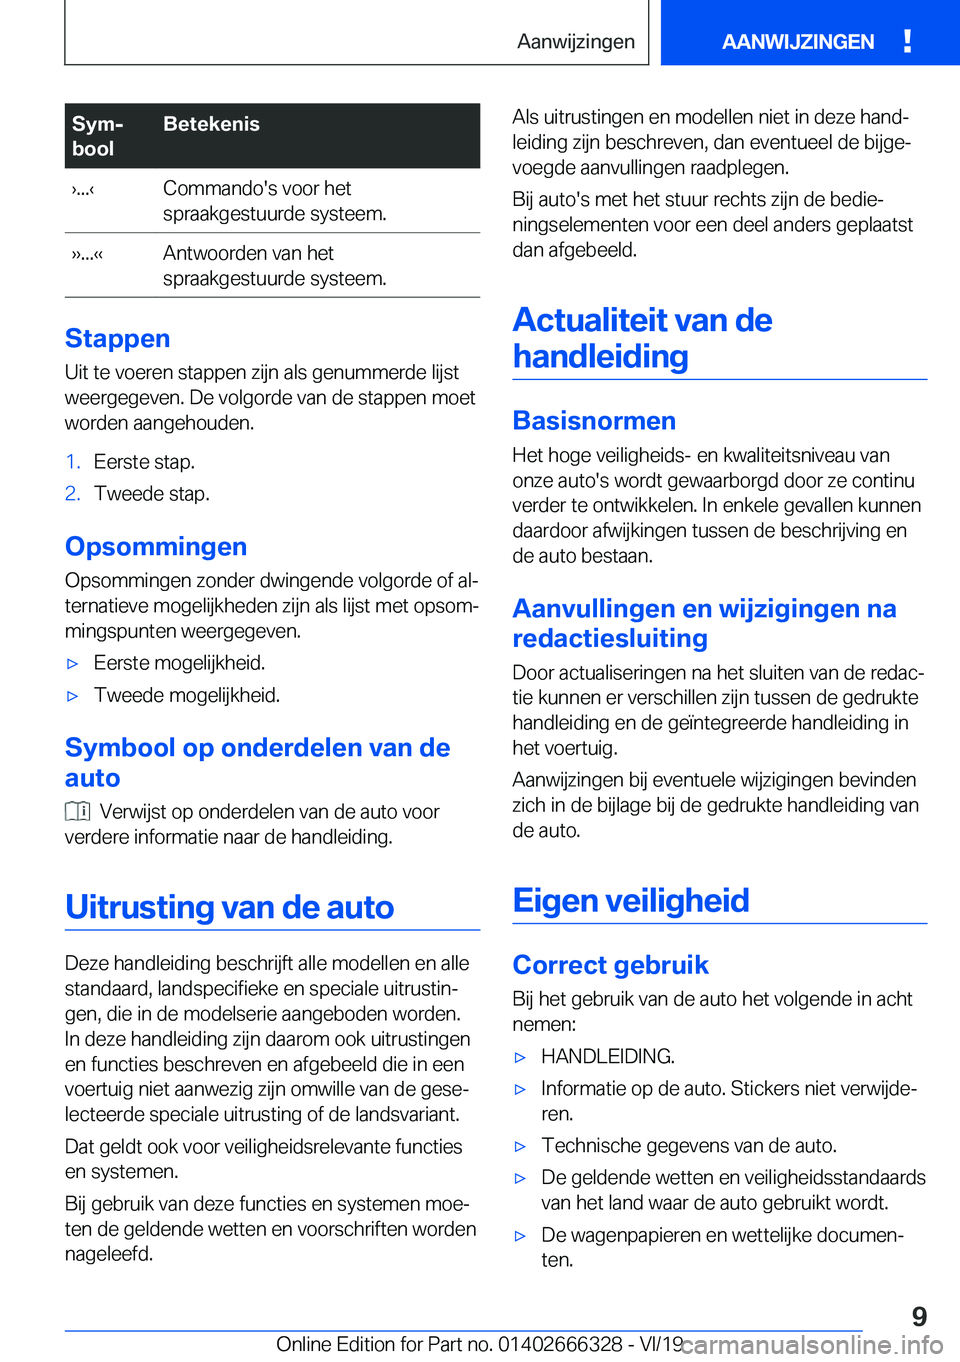 BMW 4 SERIES COUPE 2020  Instructieboekjes (in Dutch) �S�y�mj
�b�o�o�l�B�e�t�e�k�e�n�i�s